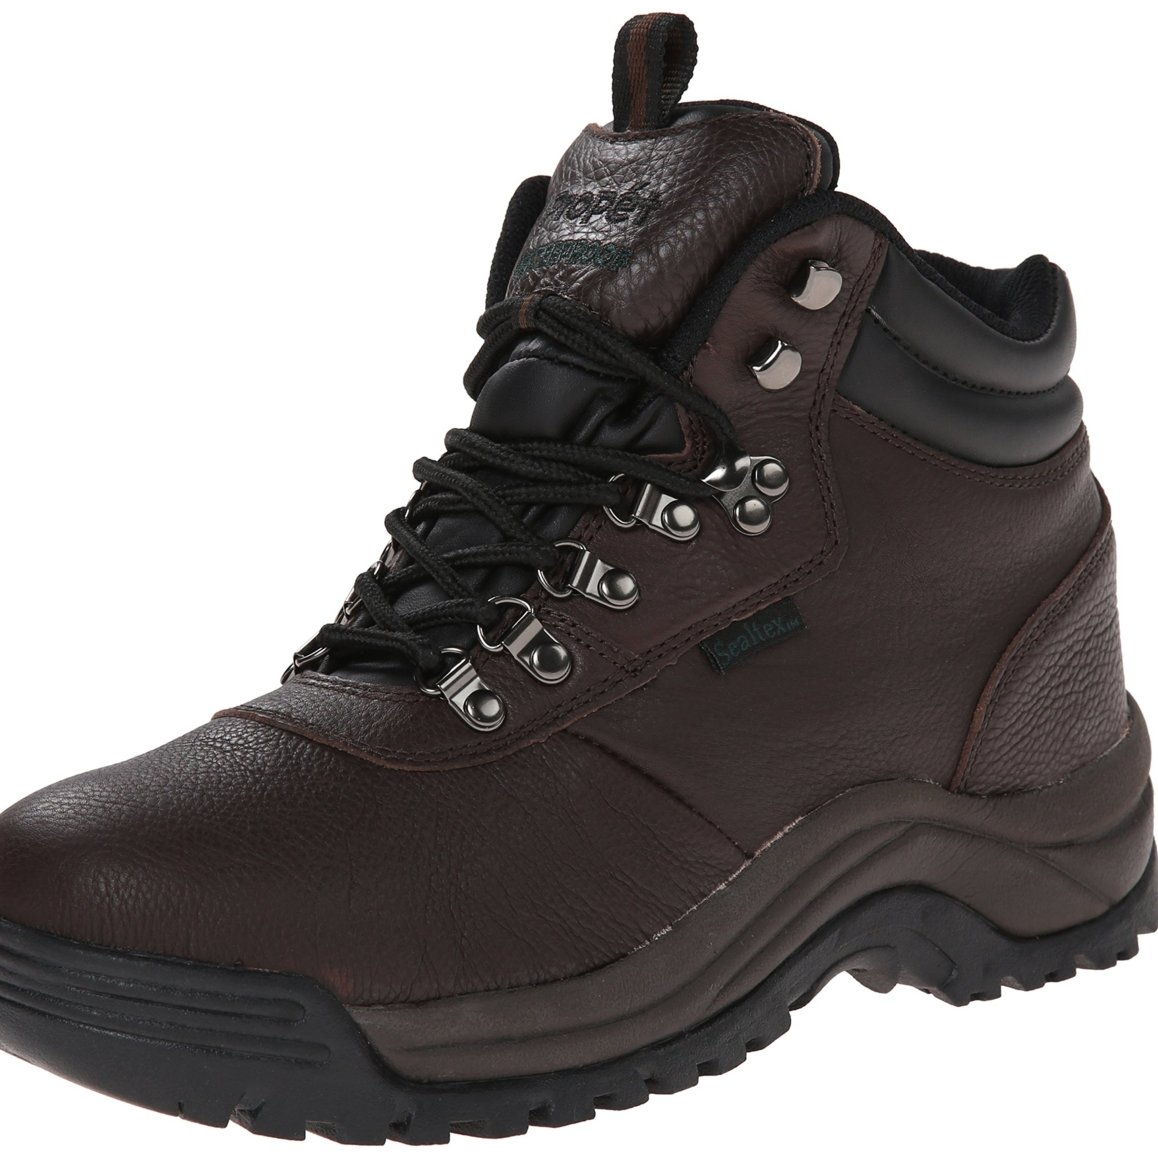 Propet Men's Cliff Walker Hiking Boot Bronco Brown - M3188BRO - BRONCO BROWN, 9.5-2E